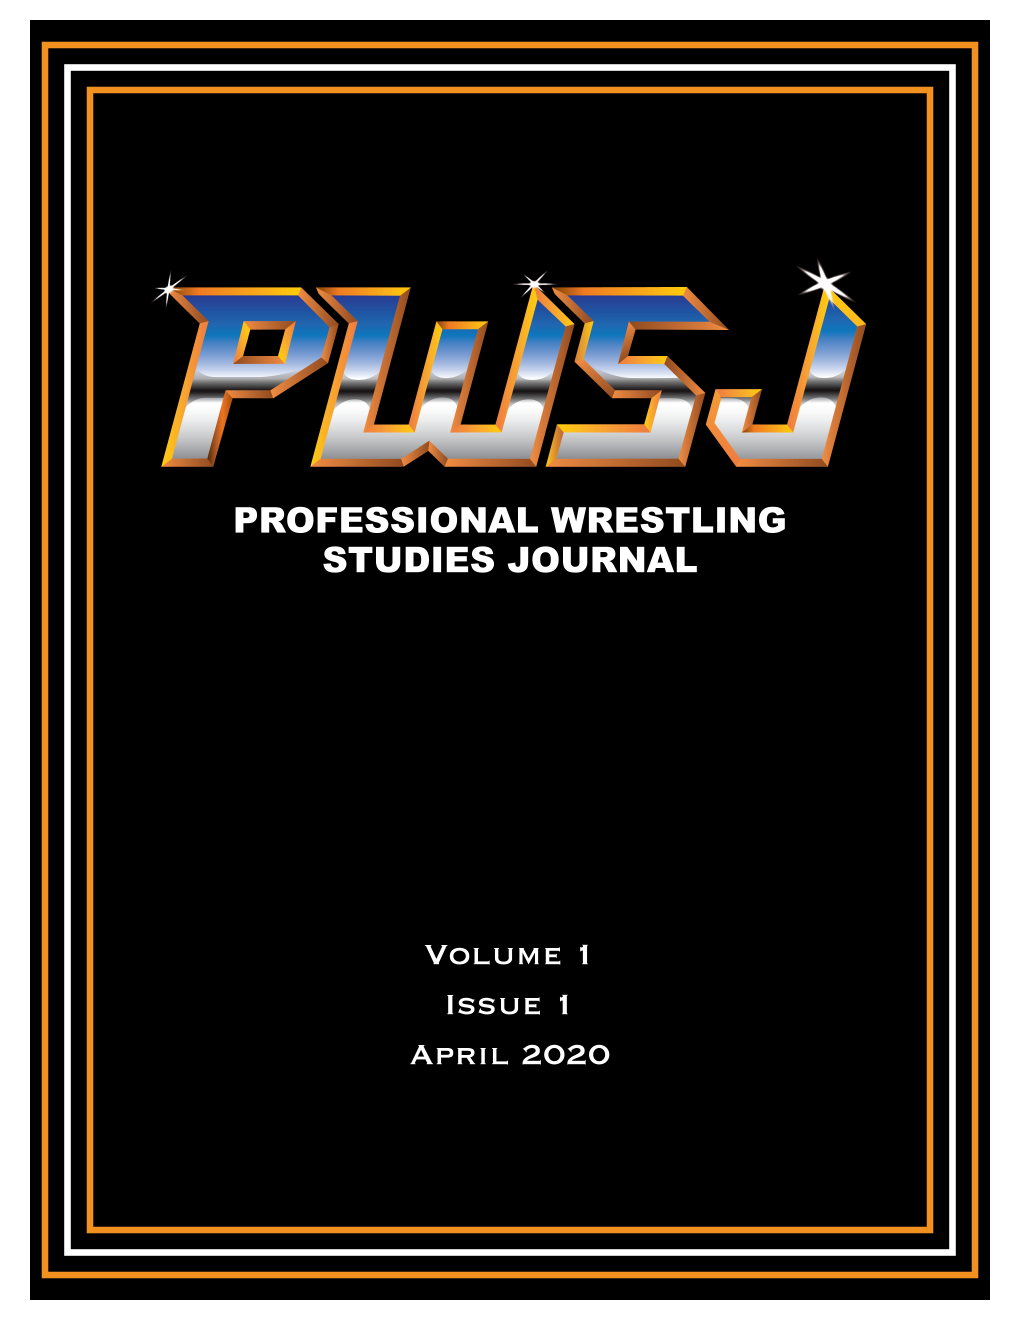 Professional Wrestling Studies Journal Volume 1, Issue 1 April 2020